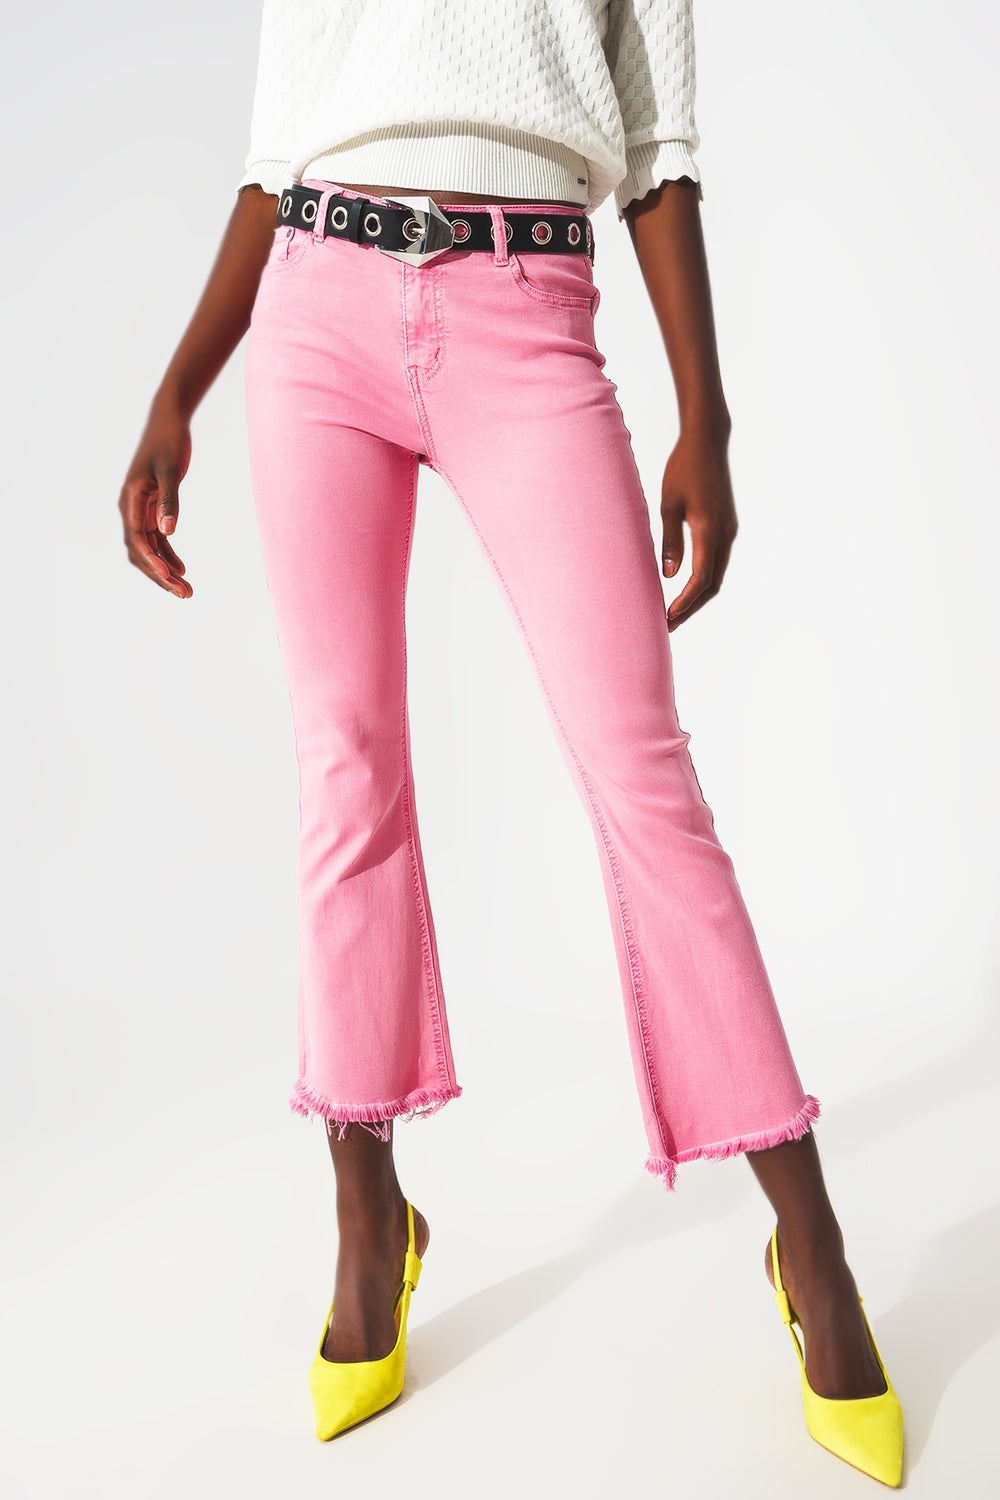 Q2 Flare jeans with raw hem edge in bubblegum pink